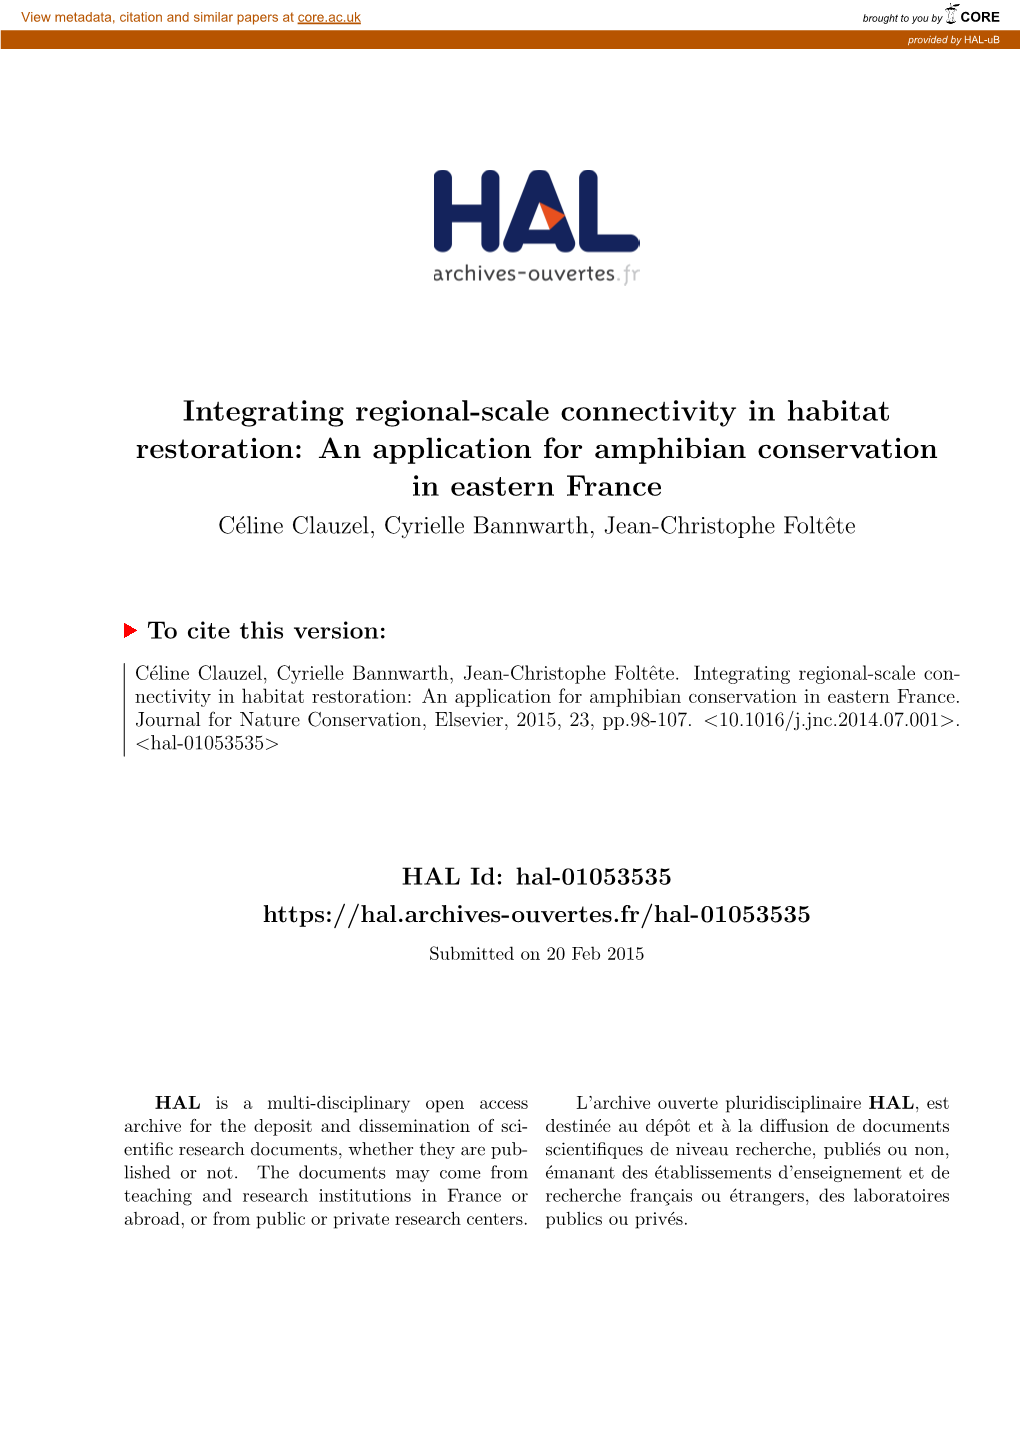 Integrating Regional-Scale Connectivity in Habitat Restoration